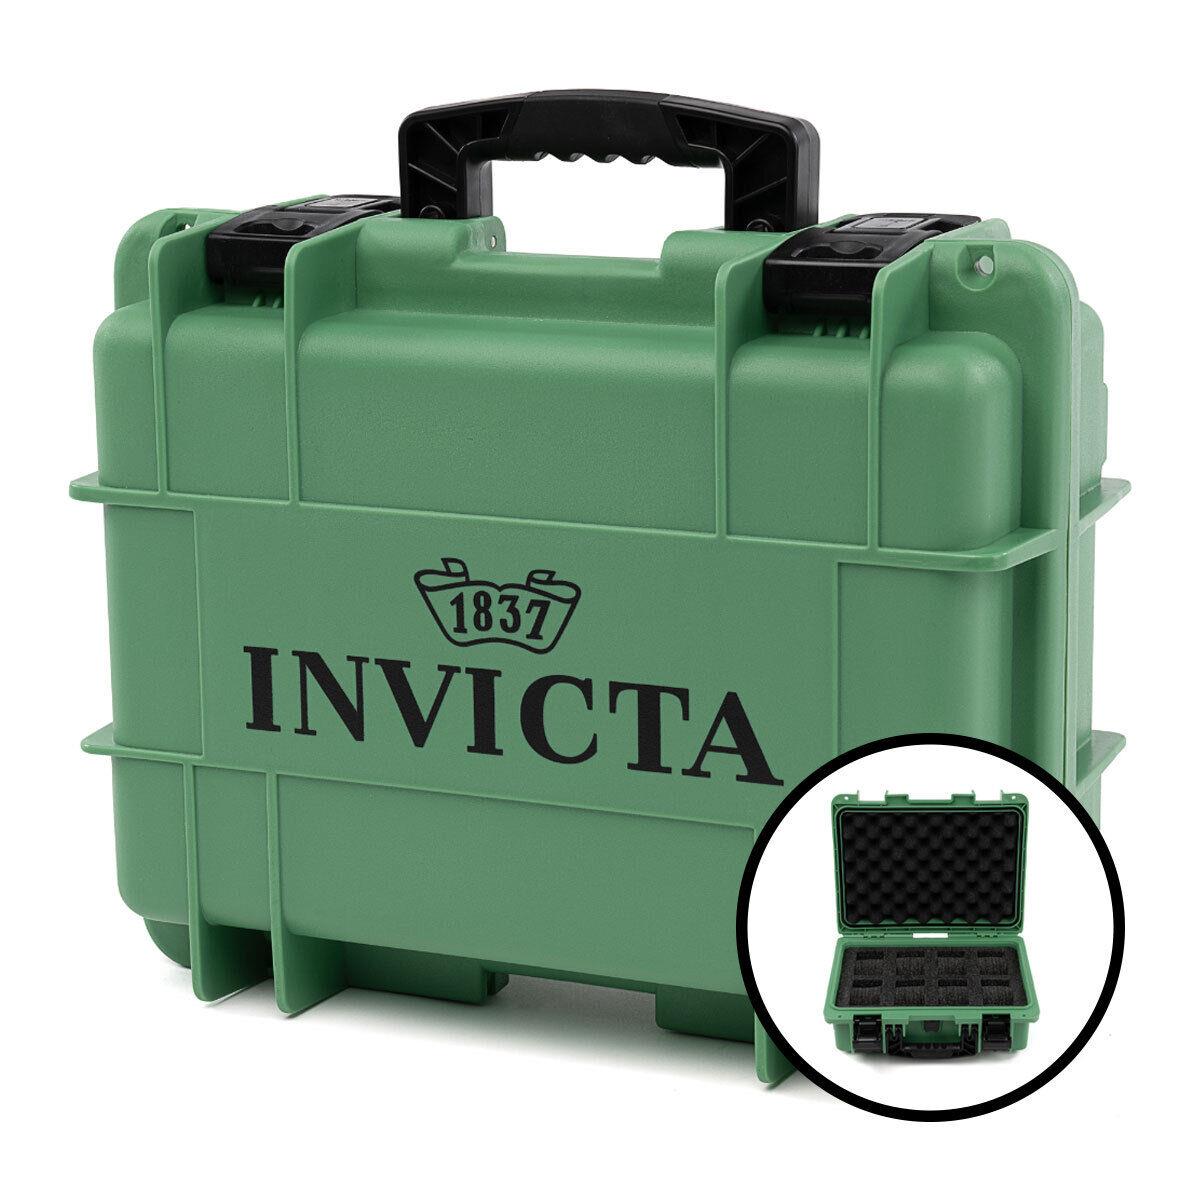 Invicta 8 Slot Dive Impact Light Green Watch Storage Box Collector Case 1837